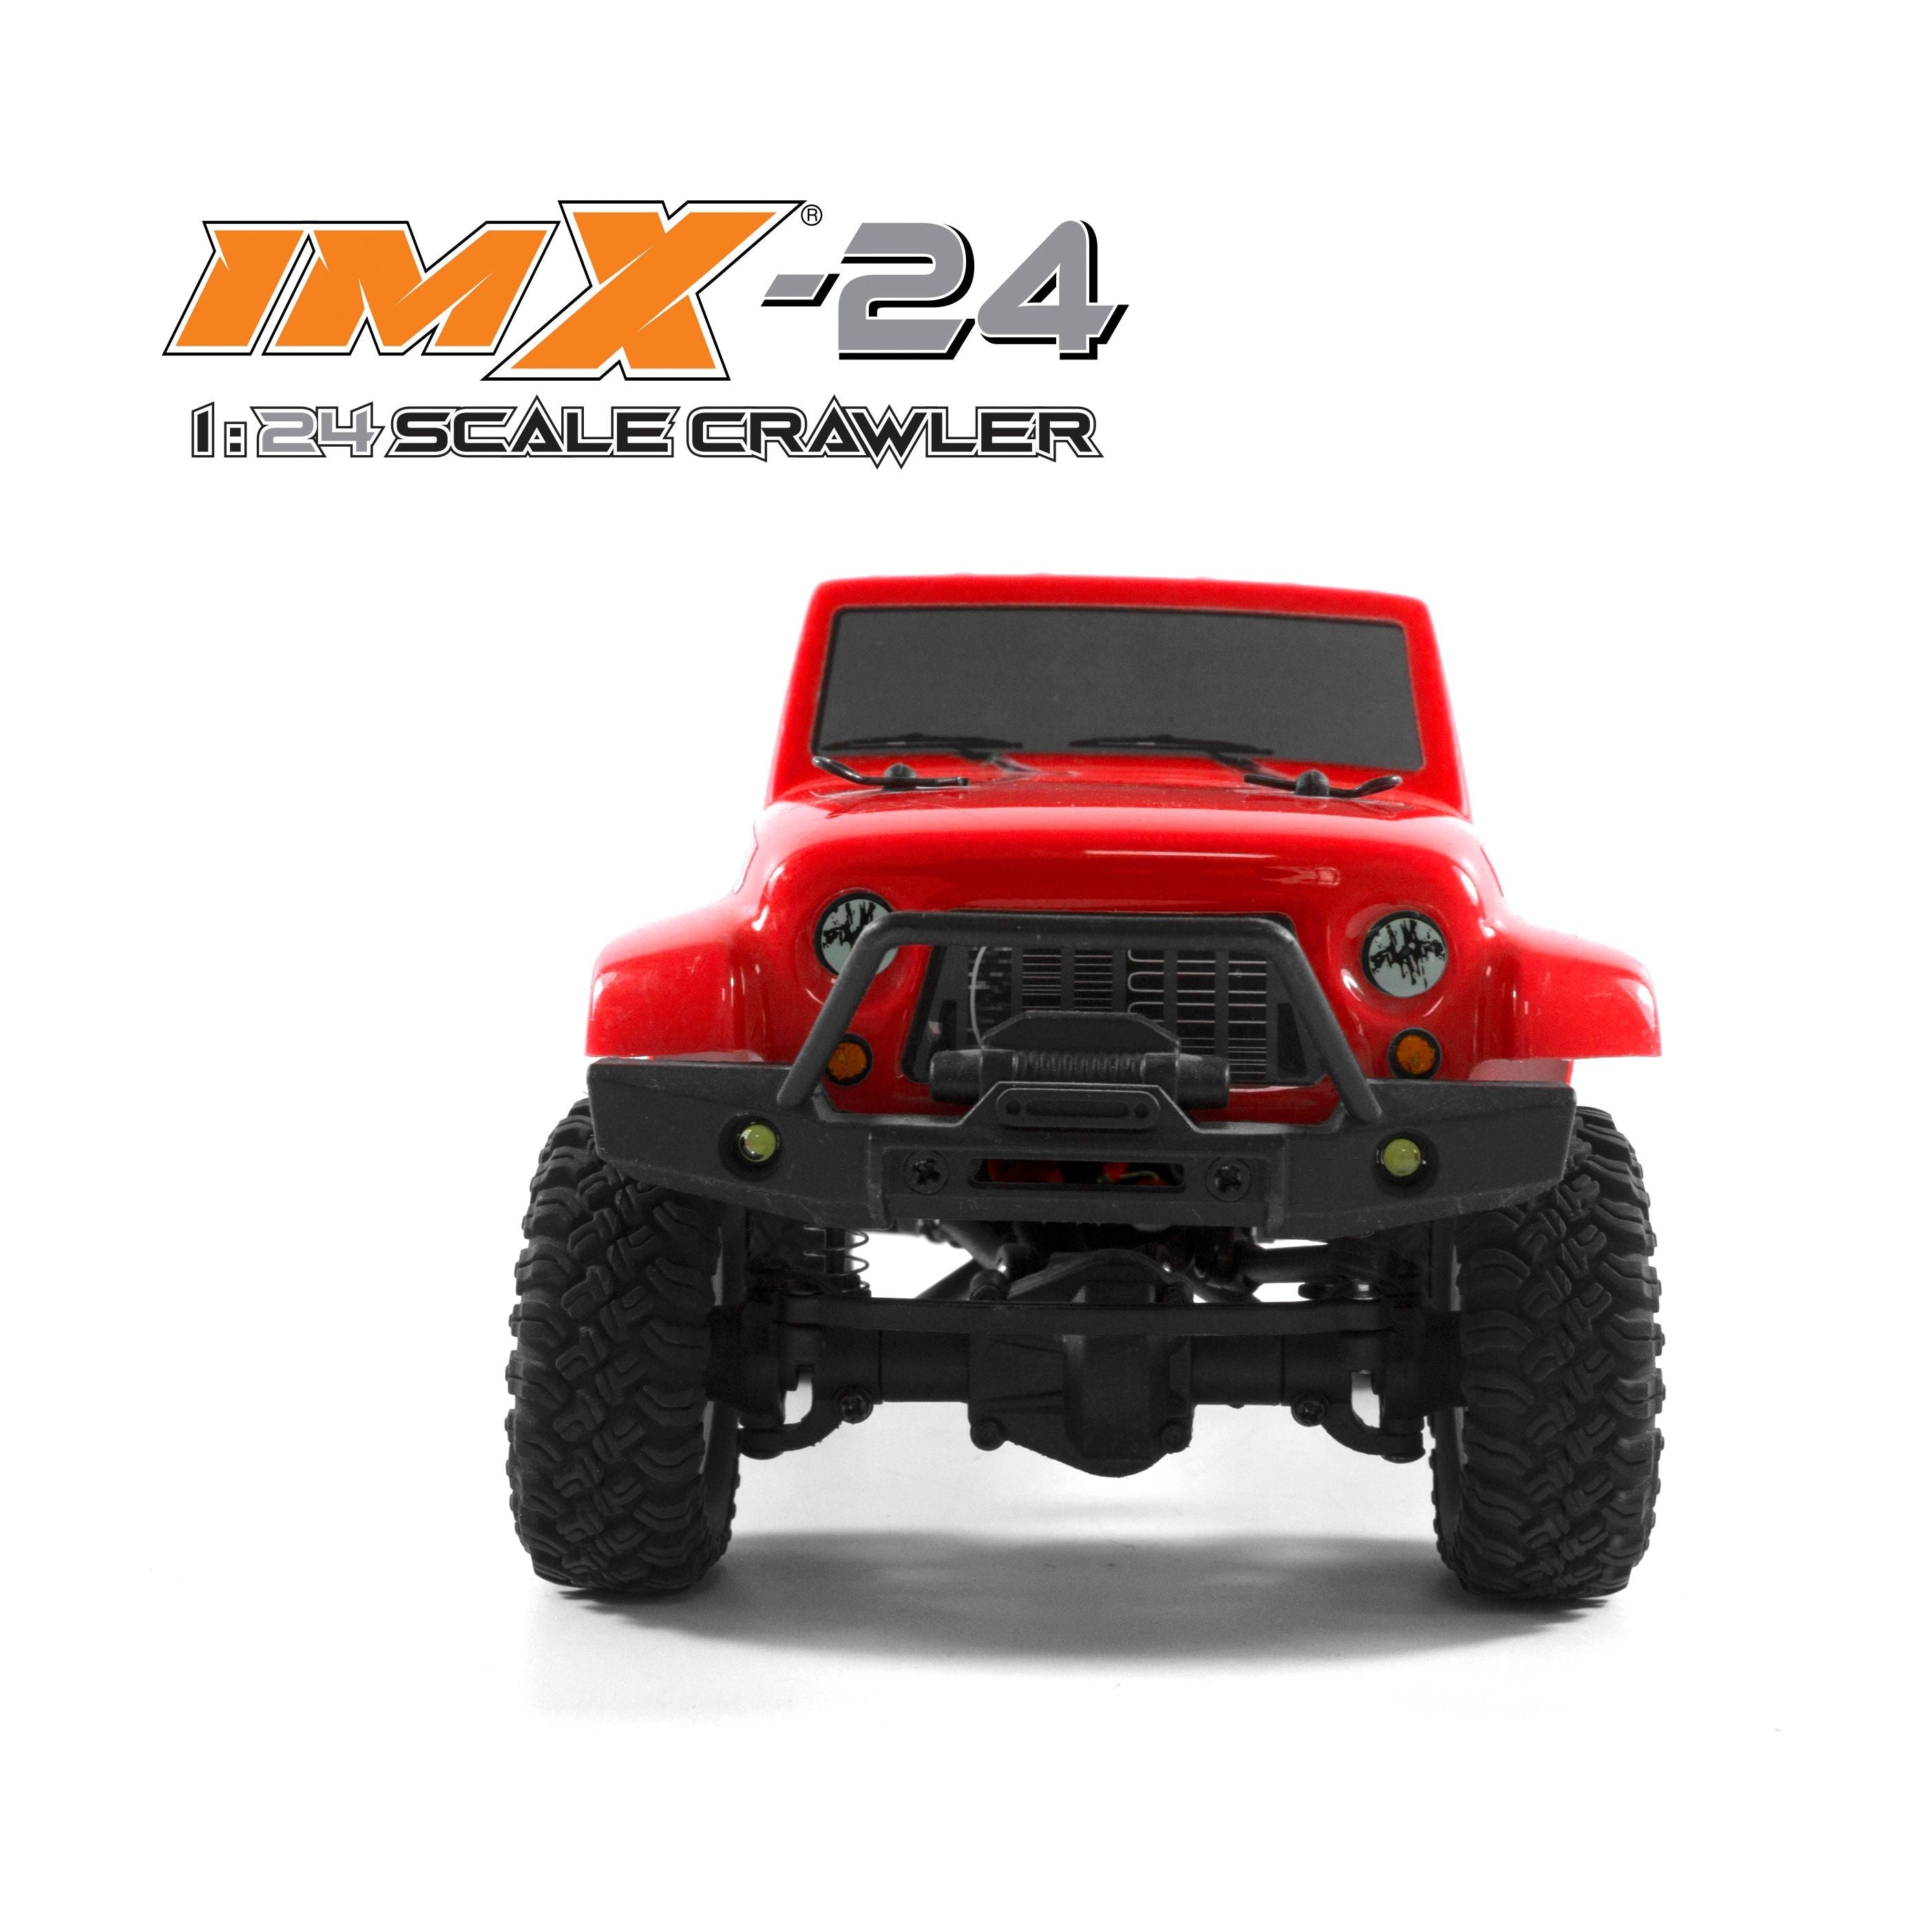 IMX-24 Tarchee RTR 4WD 24th Scale Crawler